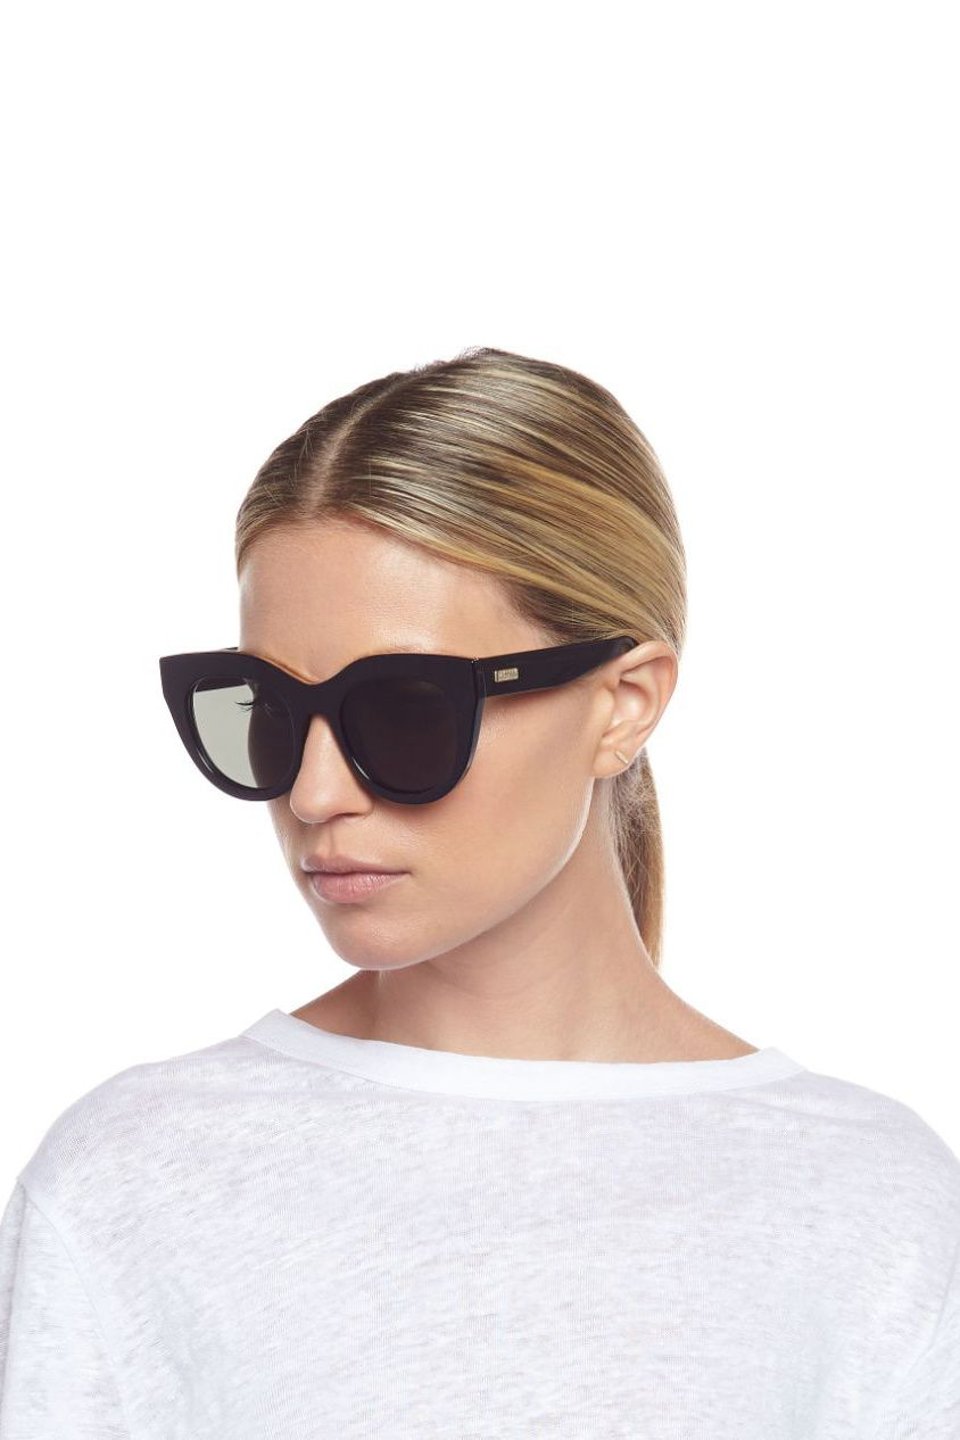 Le Specs Air Heart Sunglasses - Black